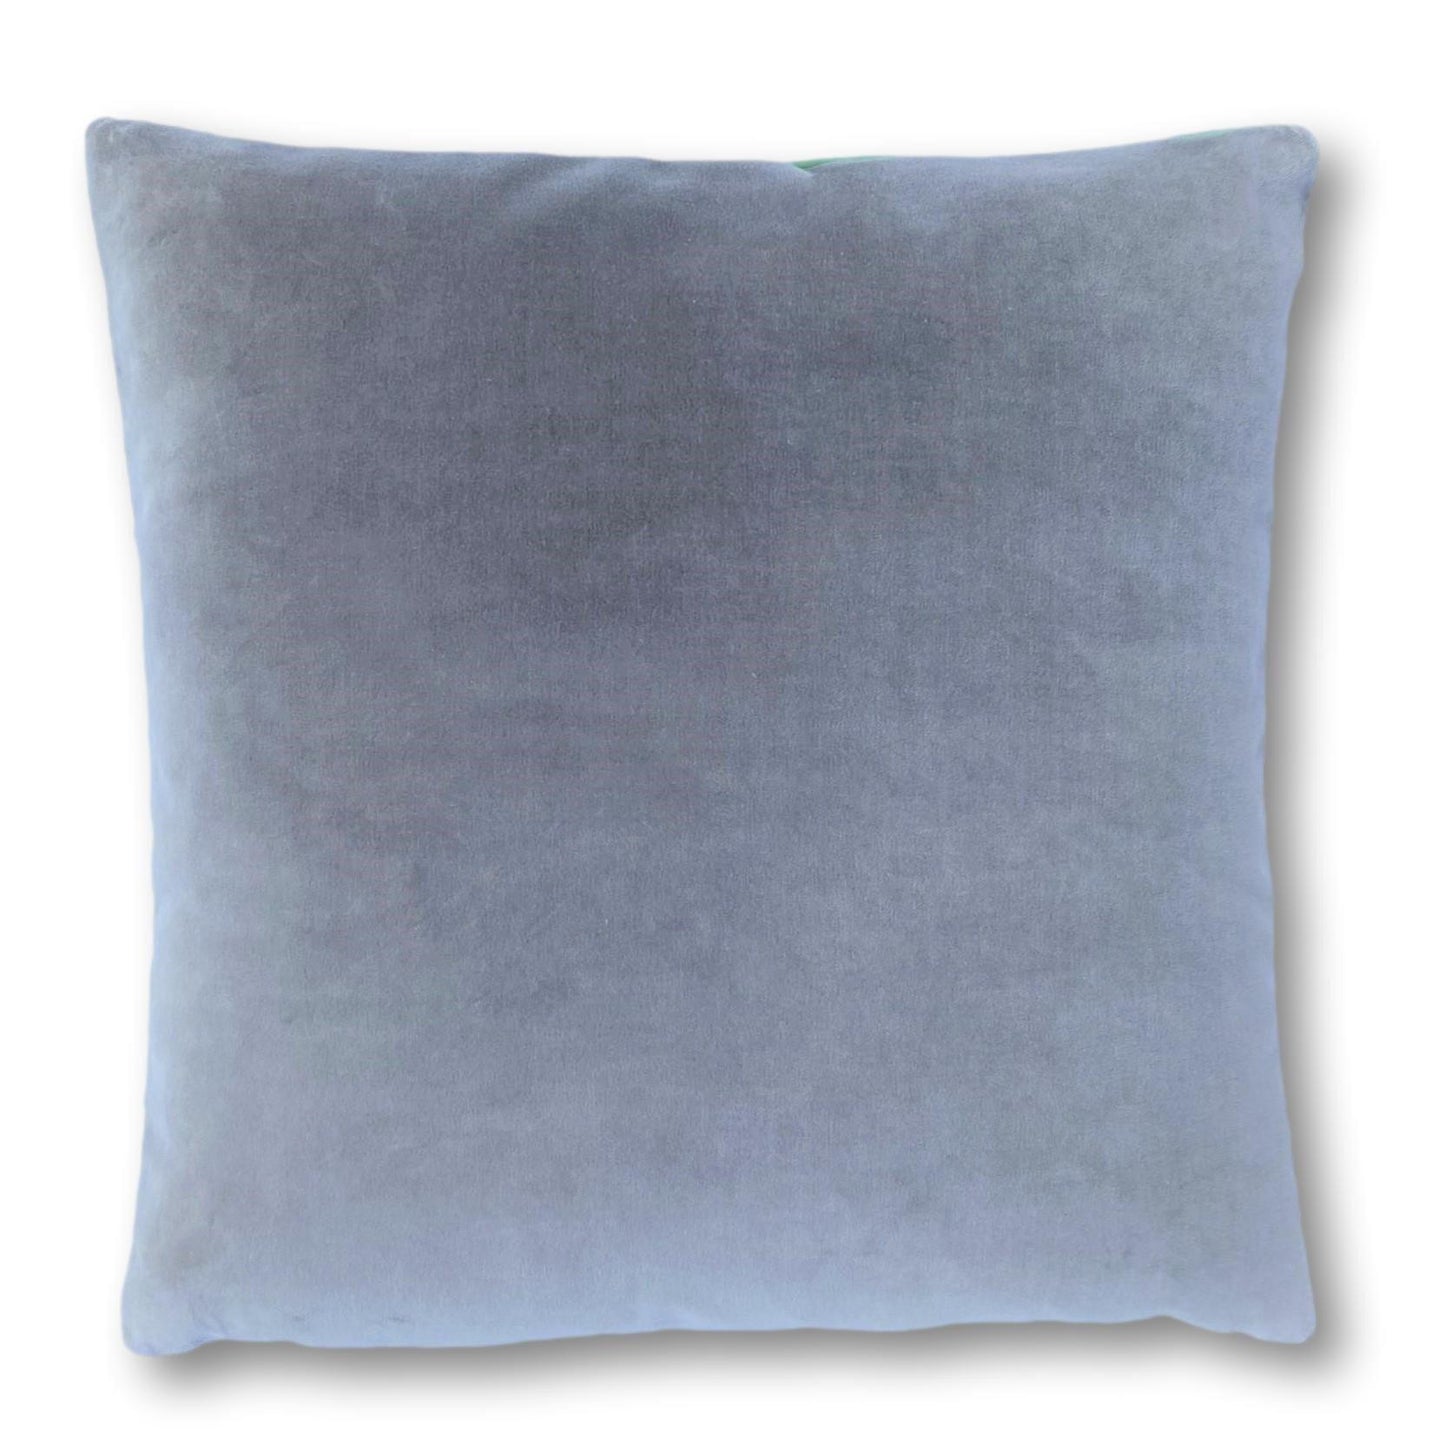 grey cushion covers